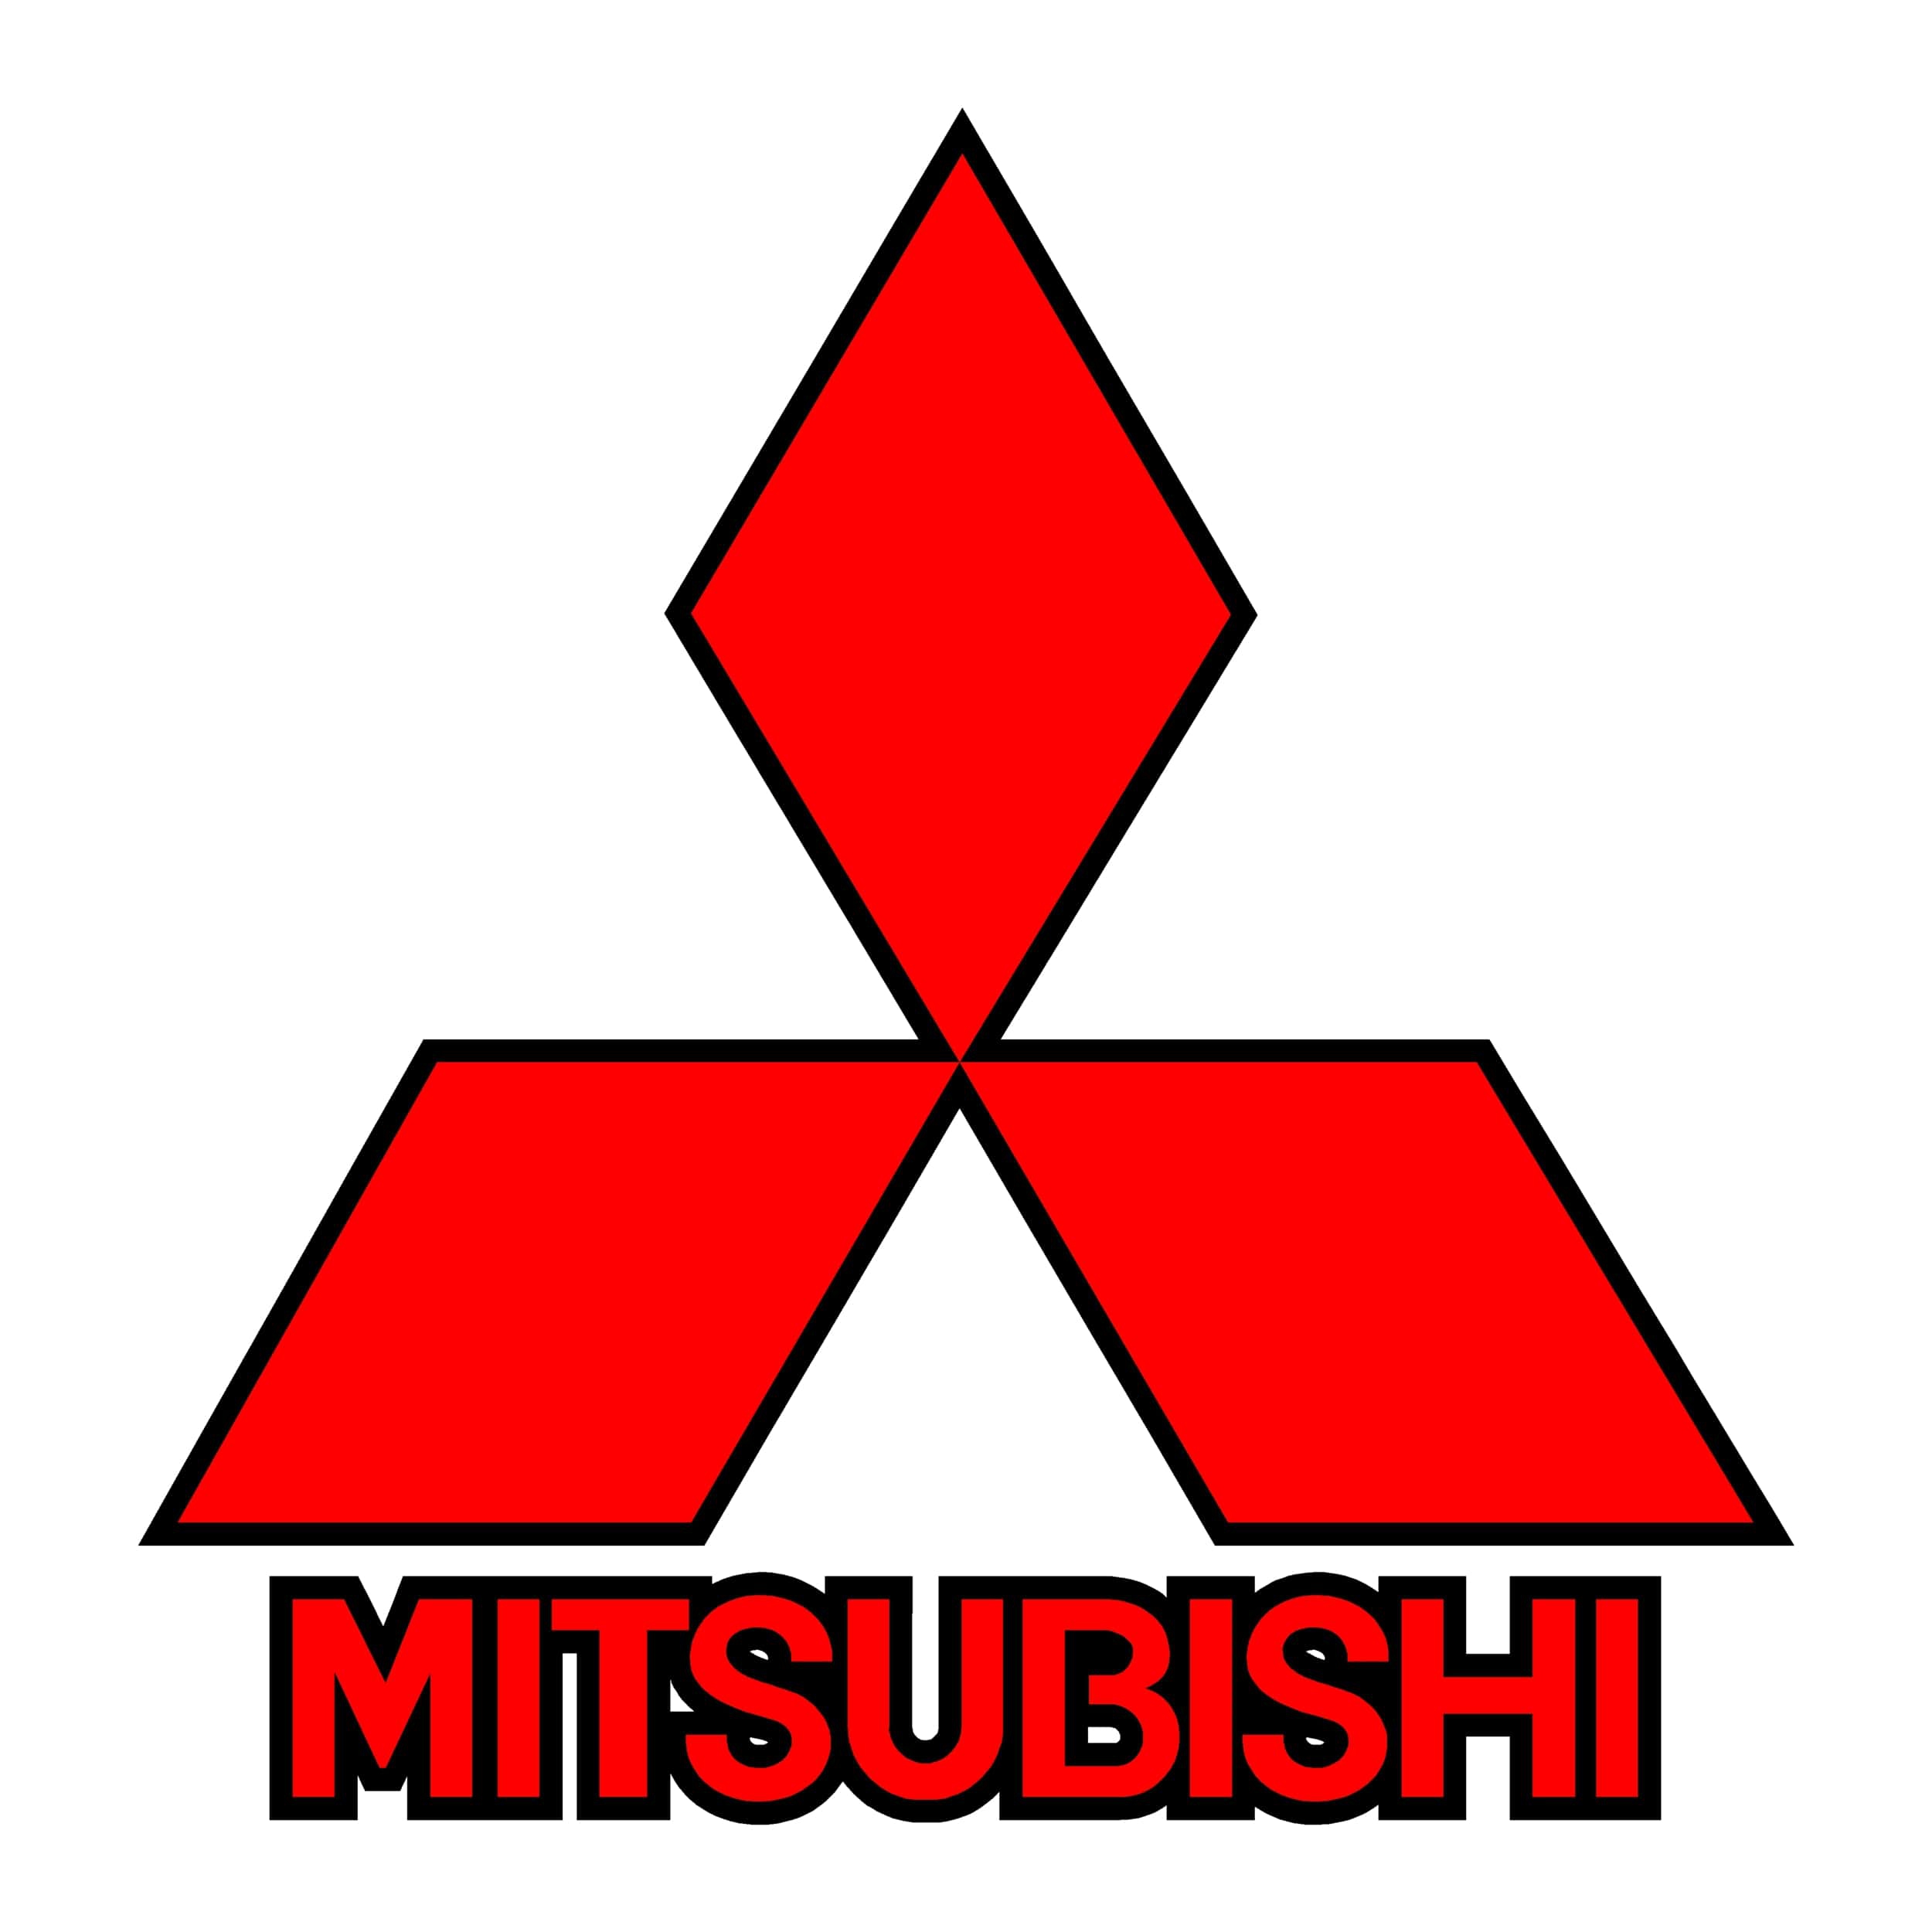 sticker-mitsubishi-ref-6-logo-l200-pajero-sport-4x4-land-tout-terrain-competition-rallye-autocollant-stickers-min